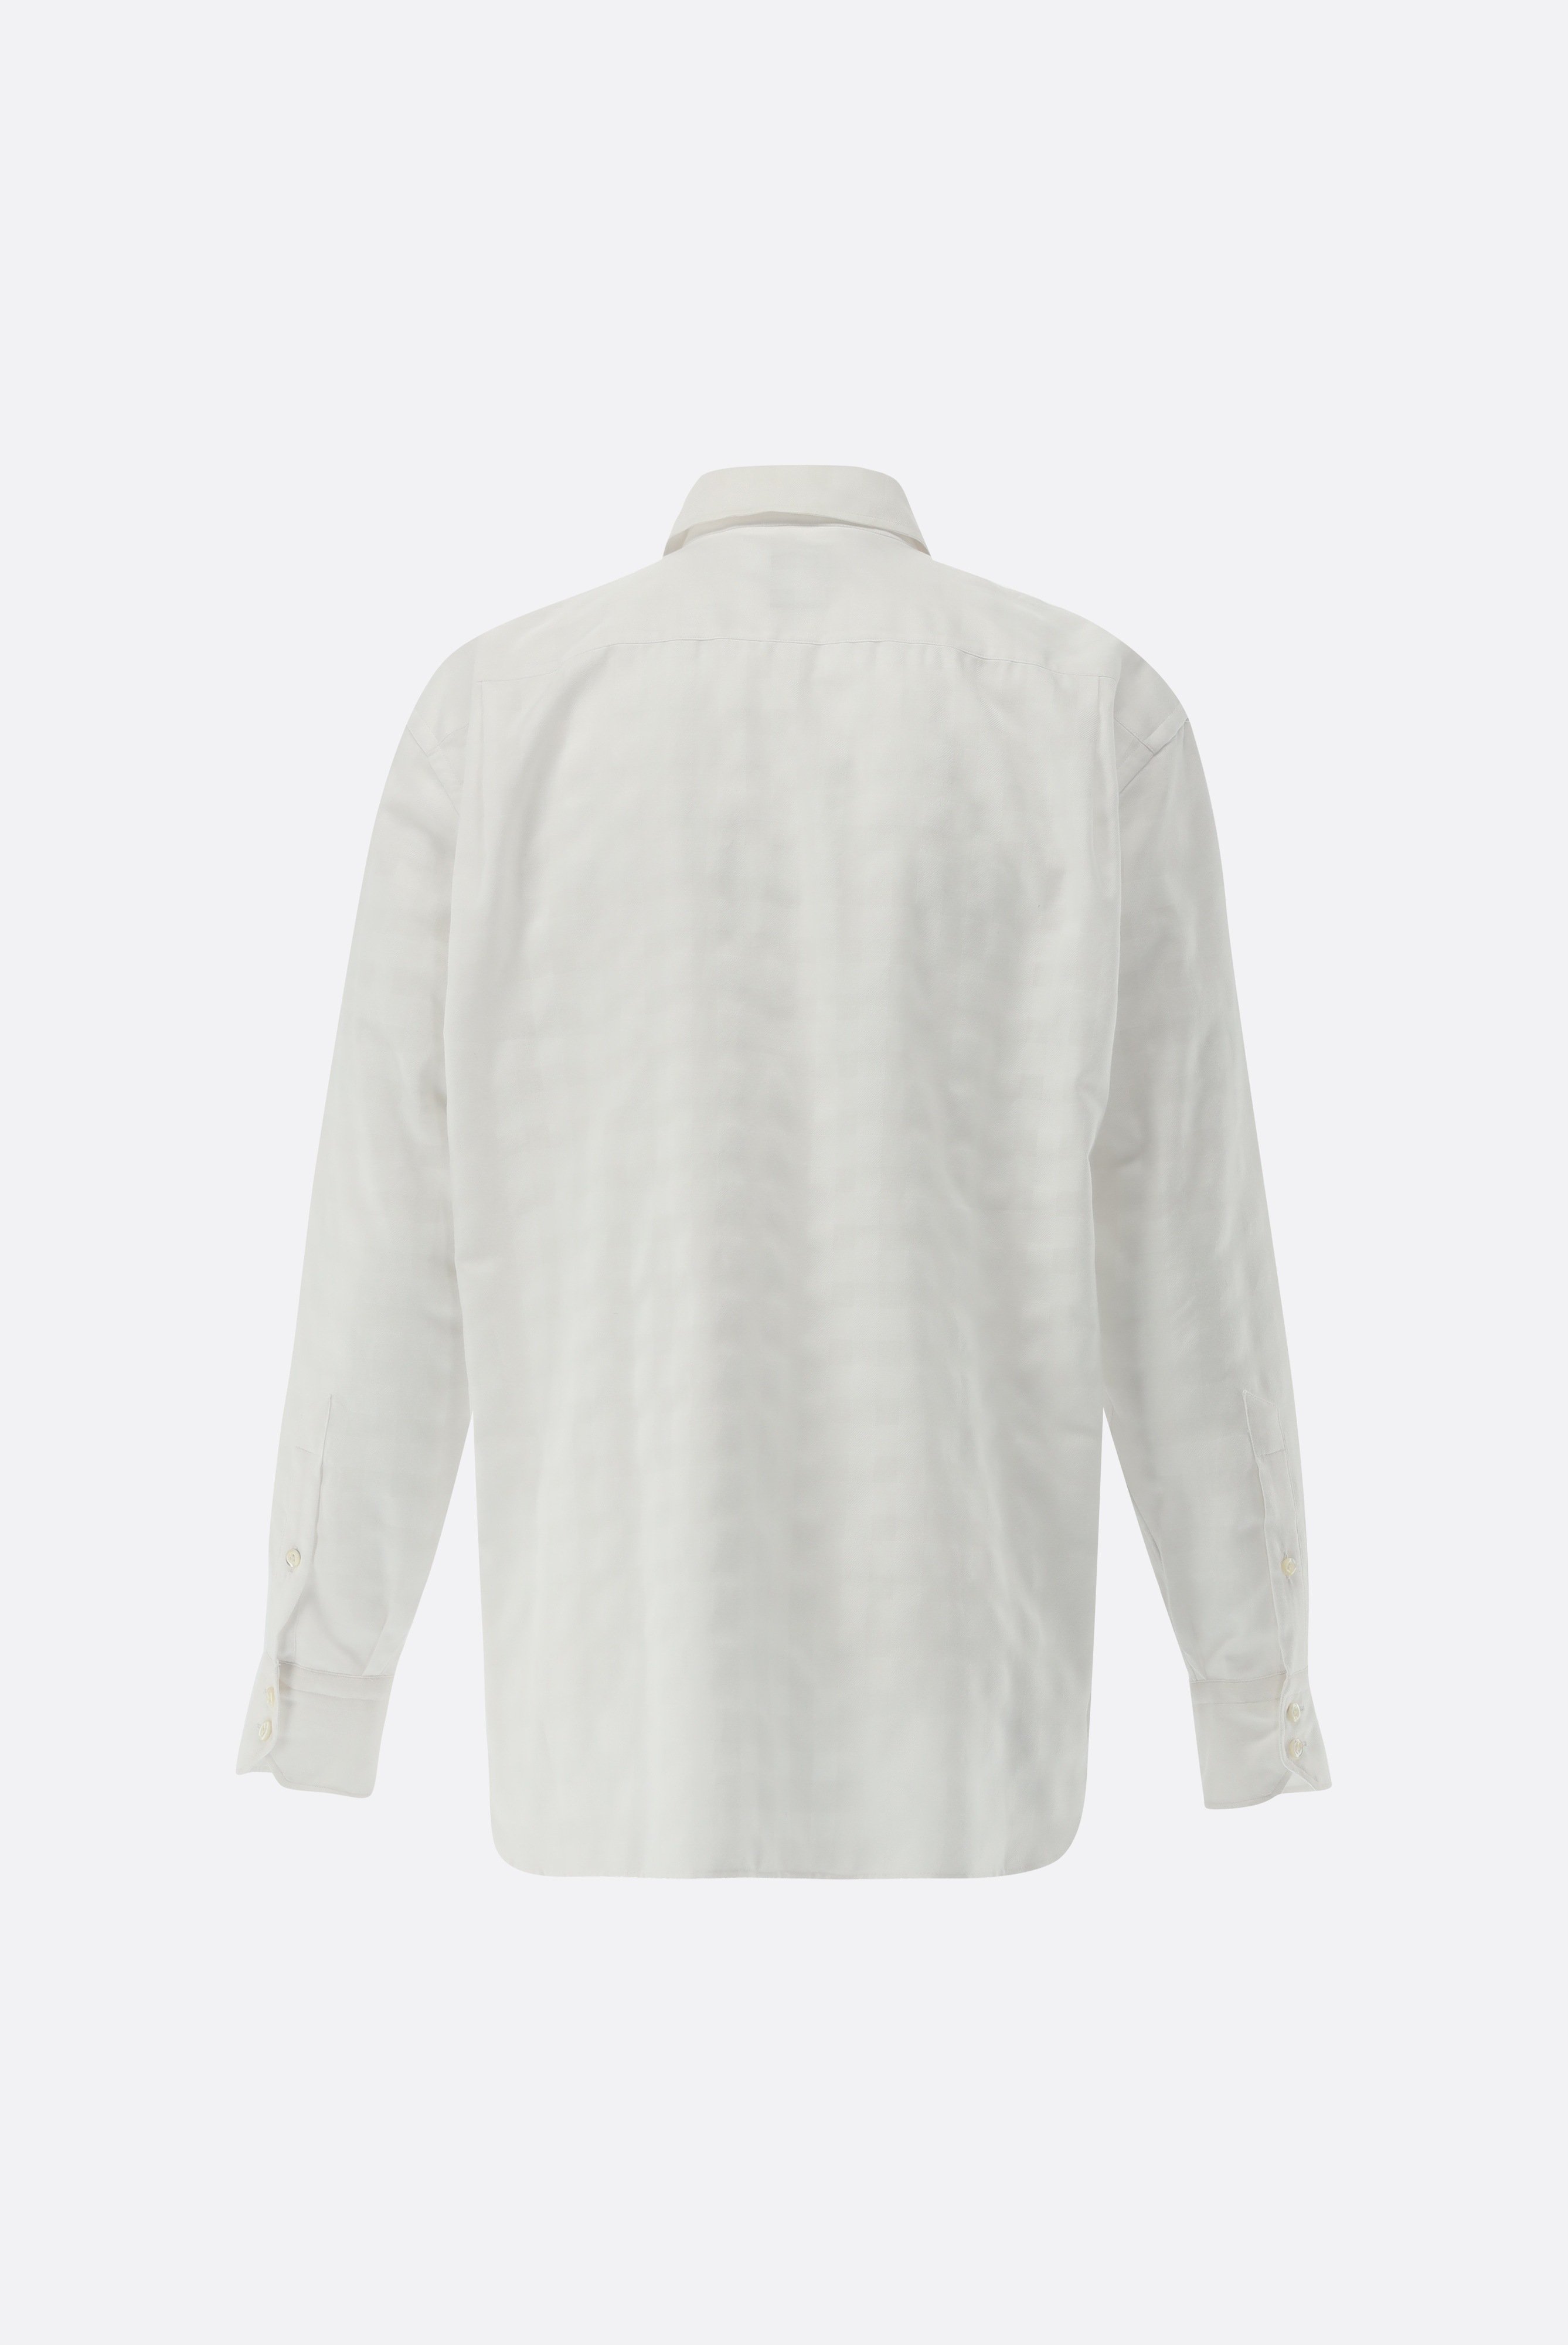 Casual Shirts+Checked twill shirt Comfort Fit+20.2021.AV.151021.000.45